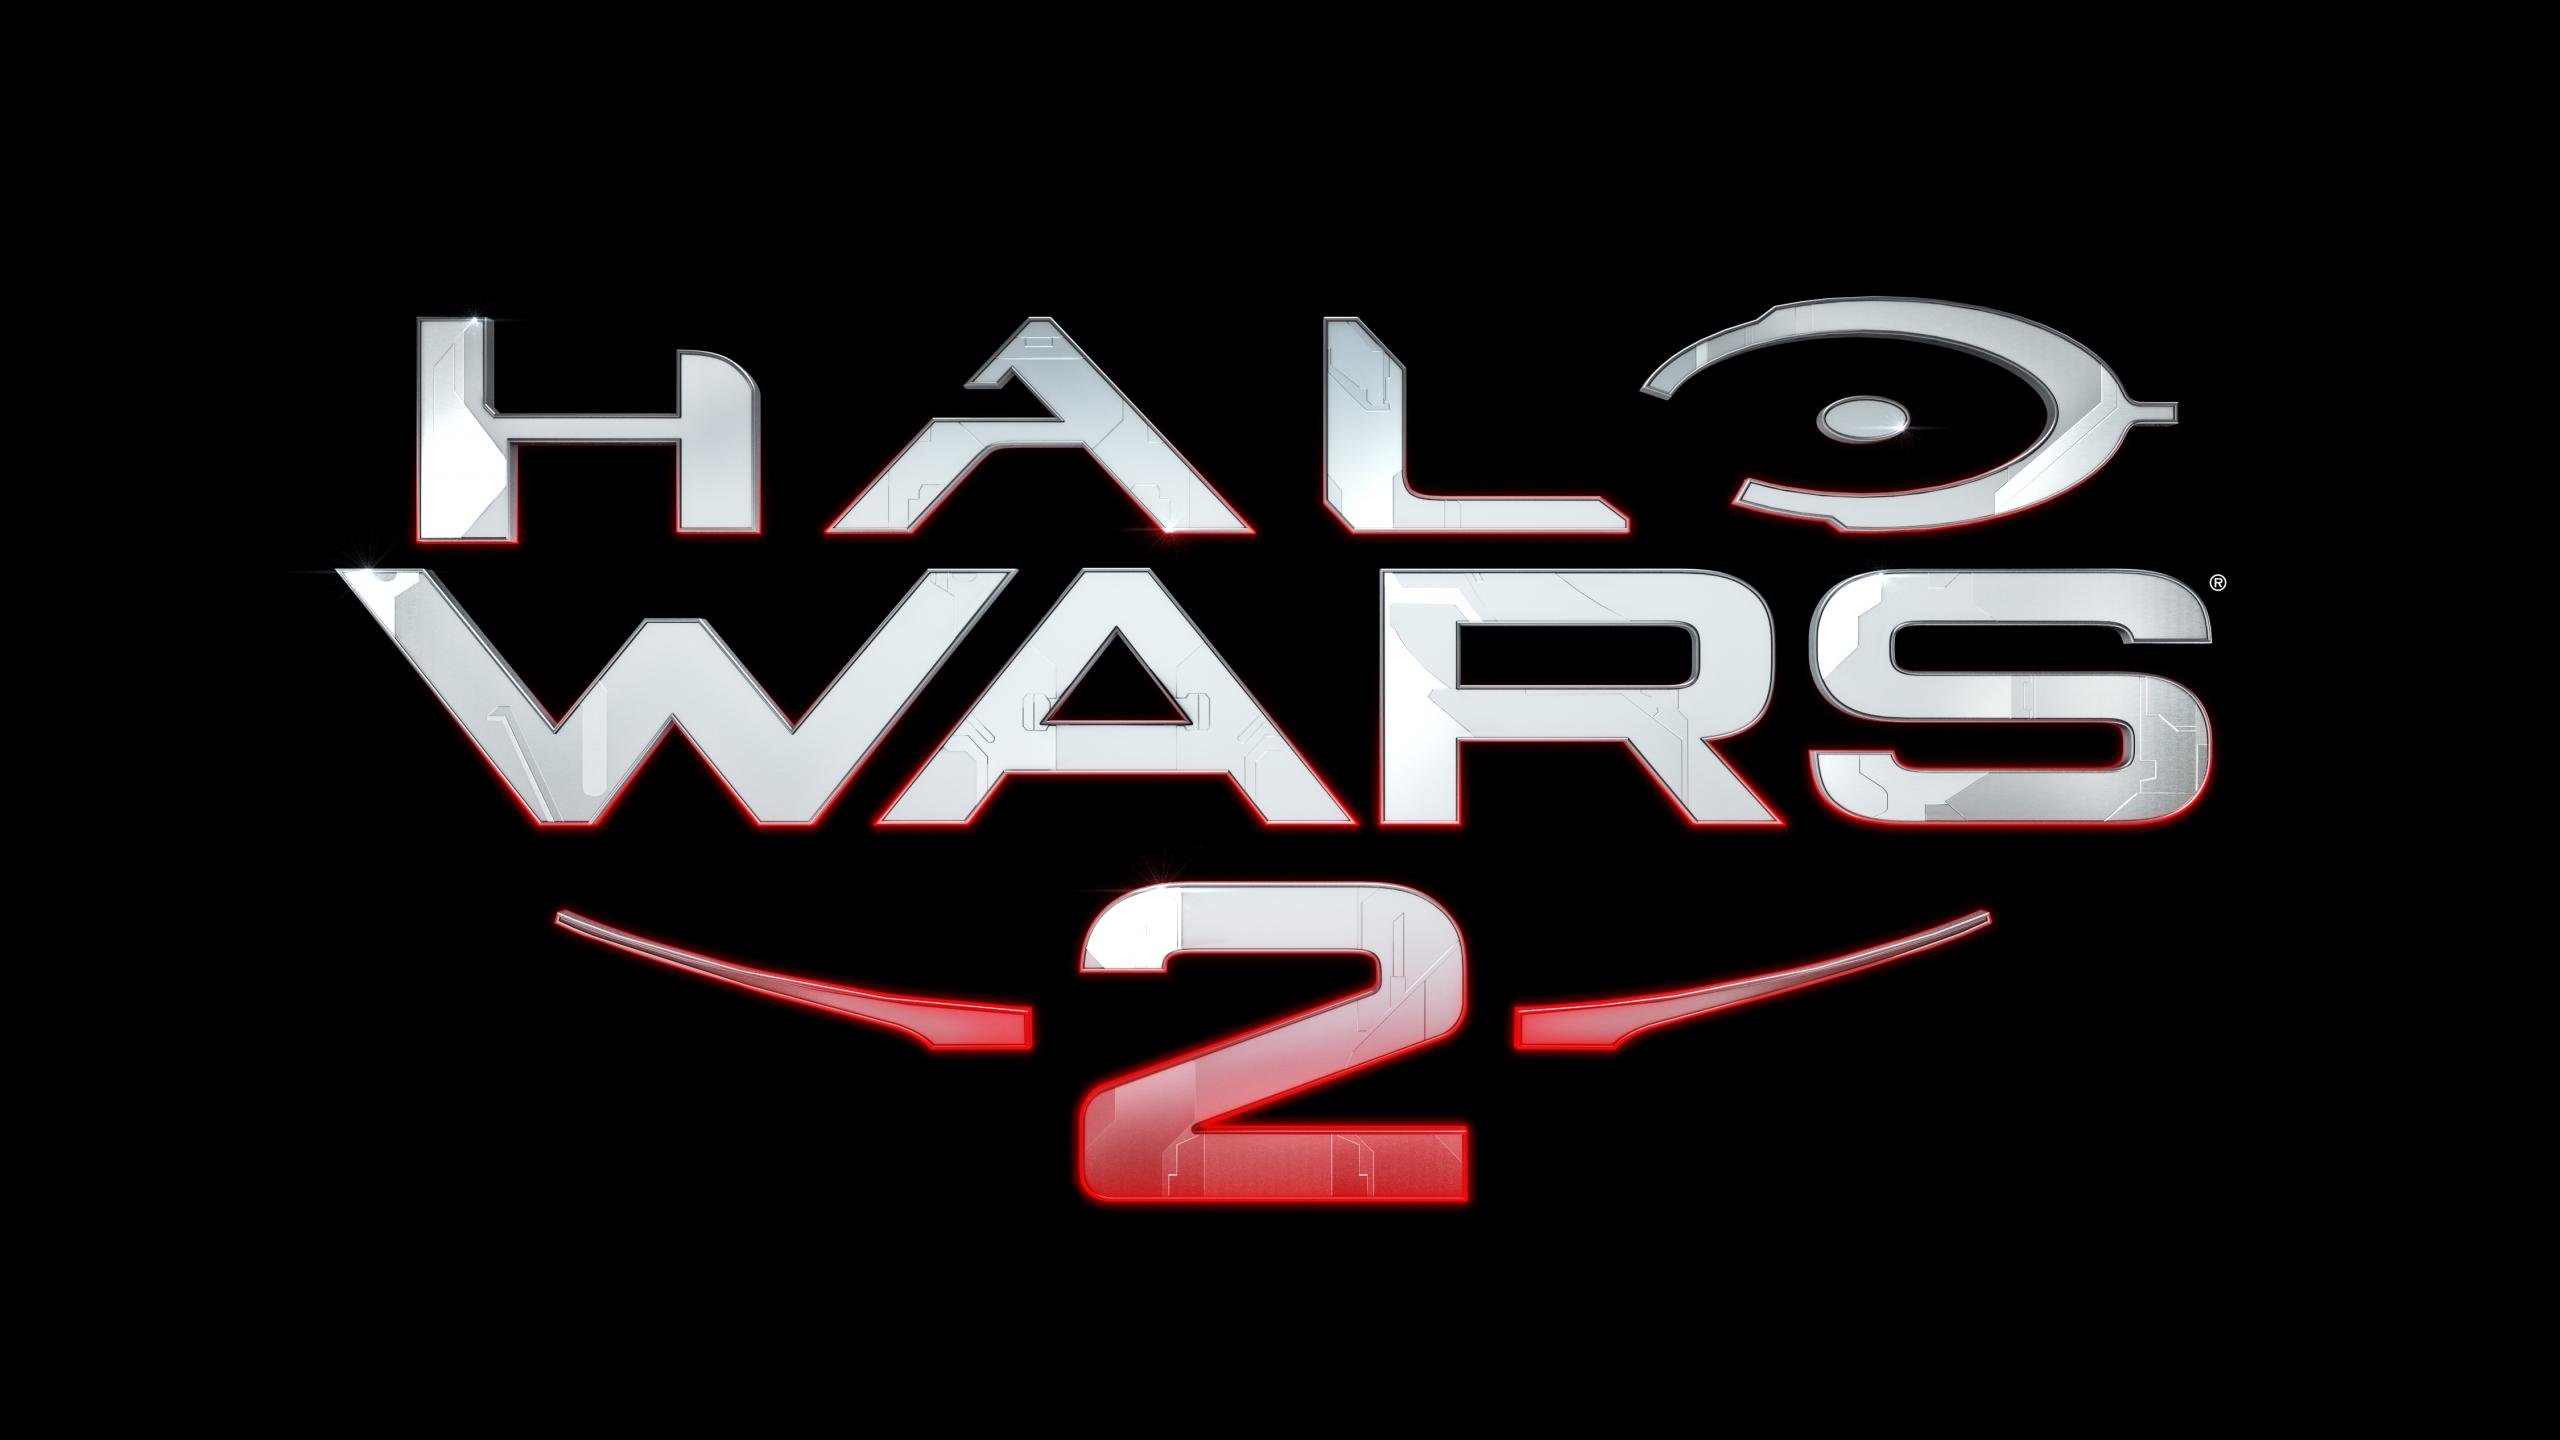 High resolution Halo Wars 2 hd 2560x1440 wallpaper ID:282627 for desktop